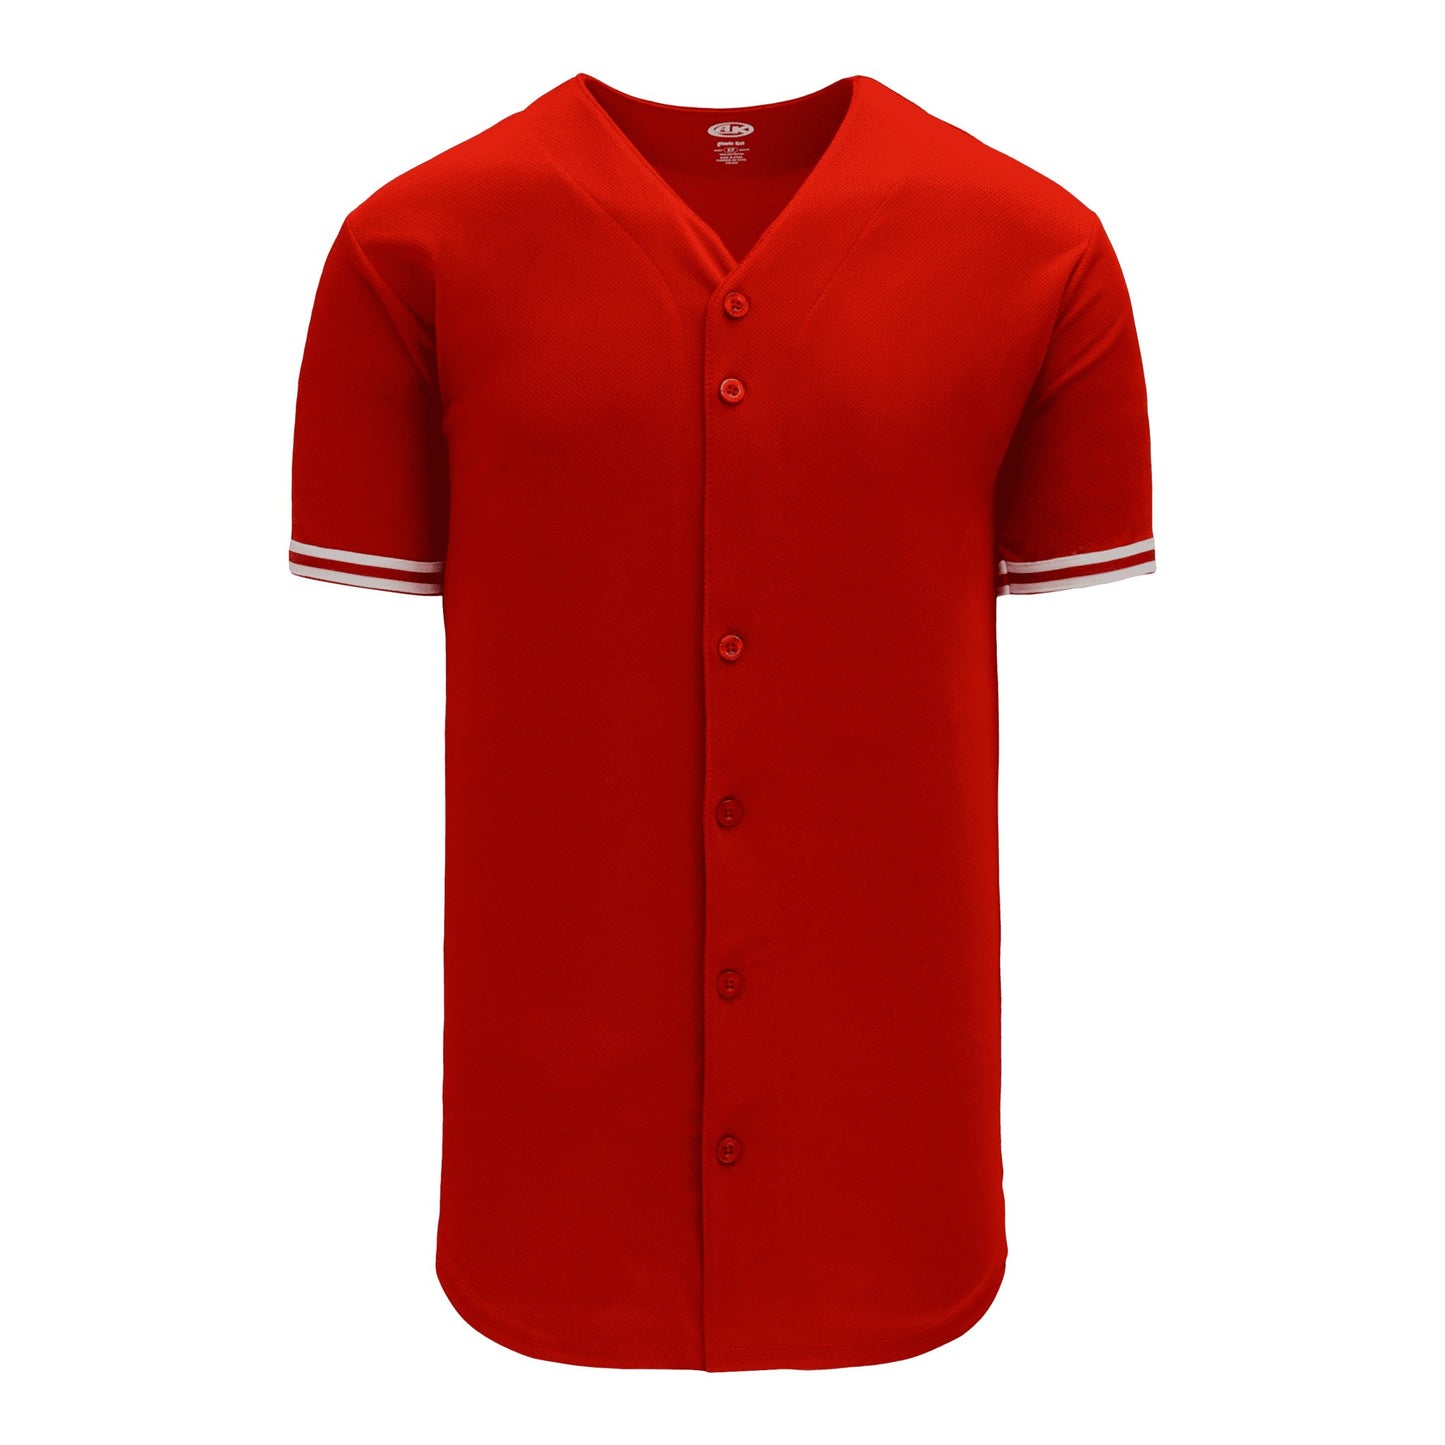 Full Button Baseball Jerseys: Pro Team Patterns, Adult Cut